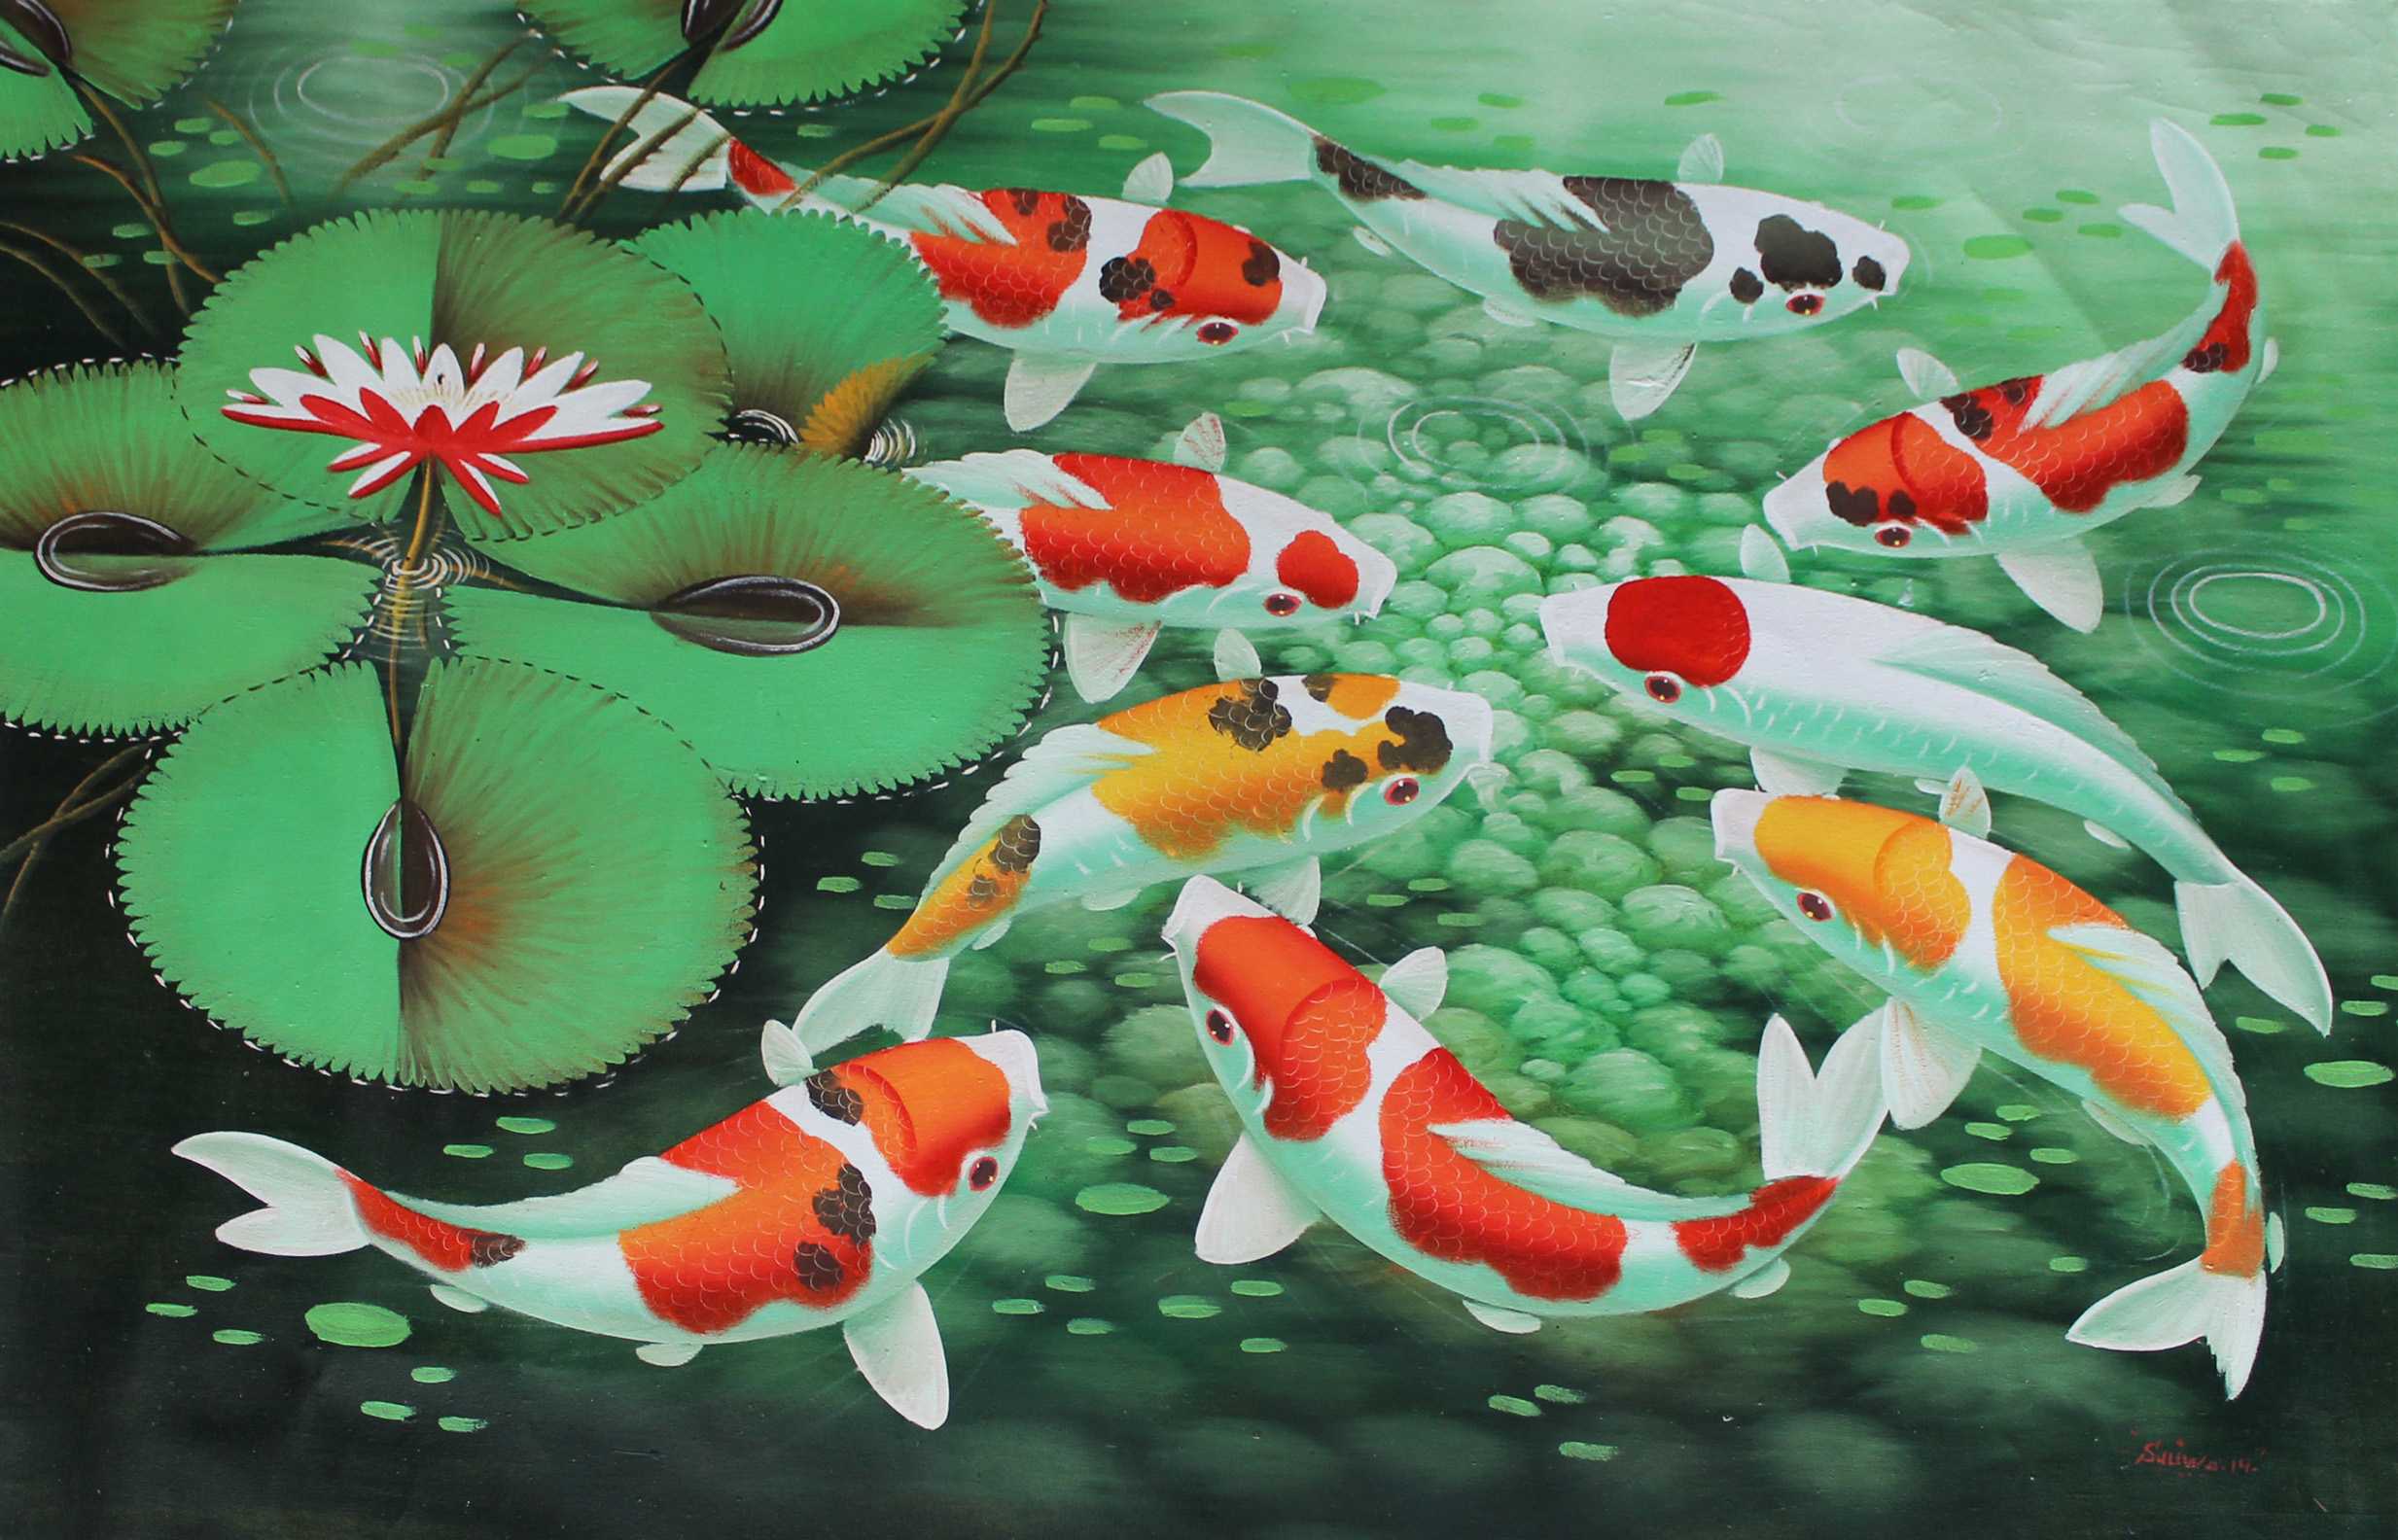 Wallpaper Tumblr Gif Water Stones And Koi Fish 3d Image Num 17